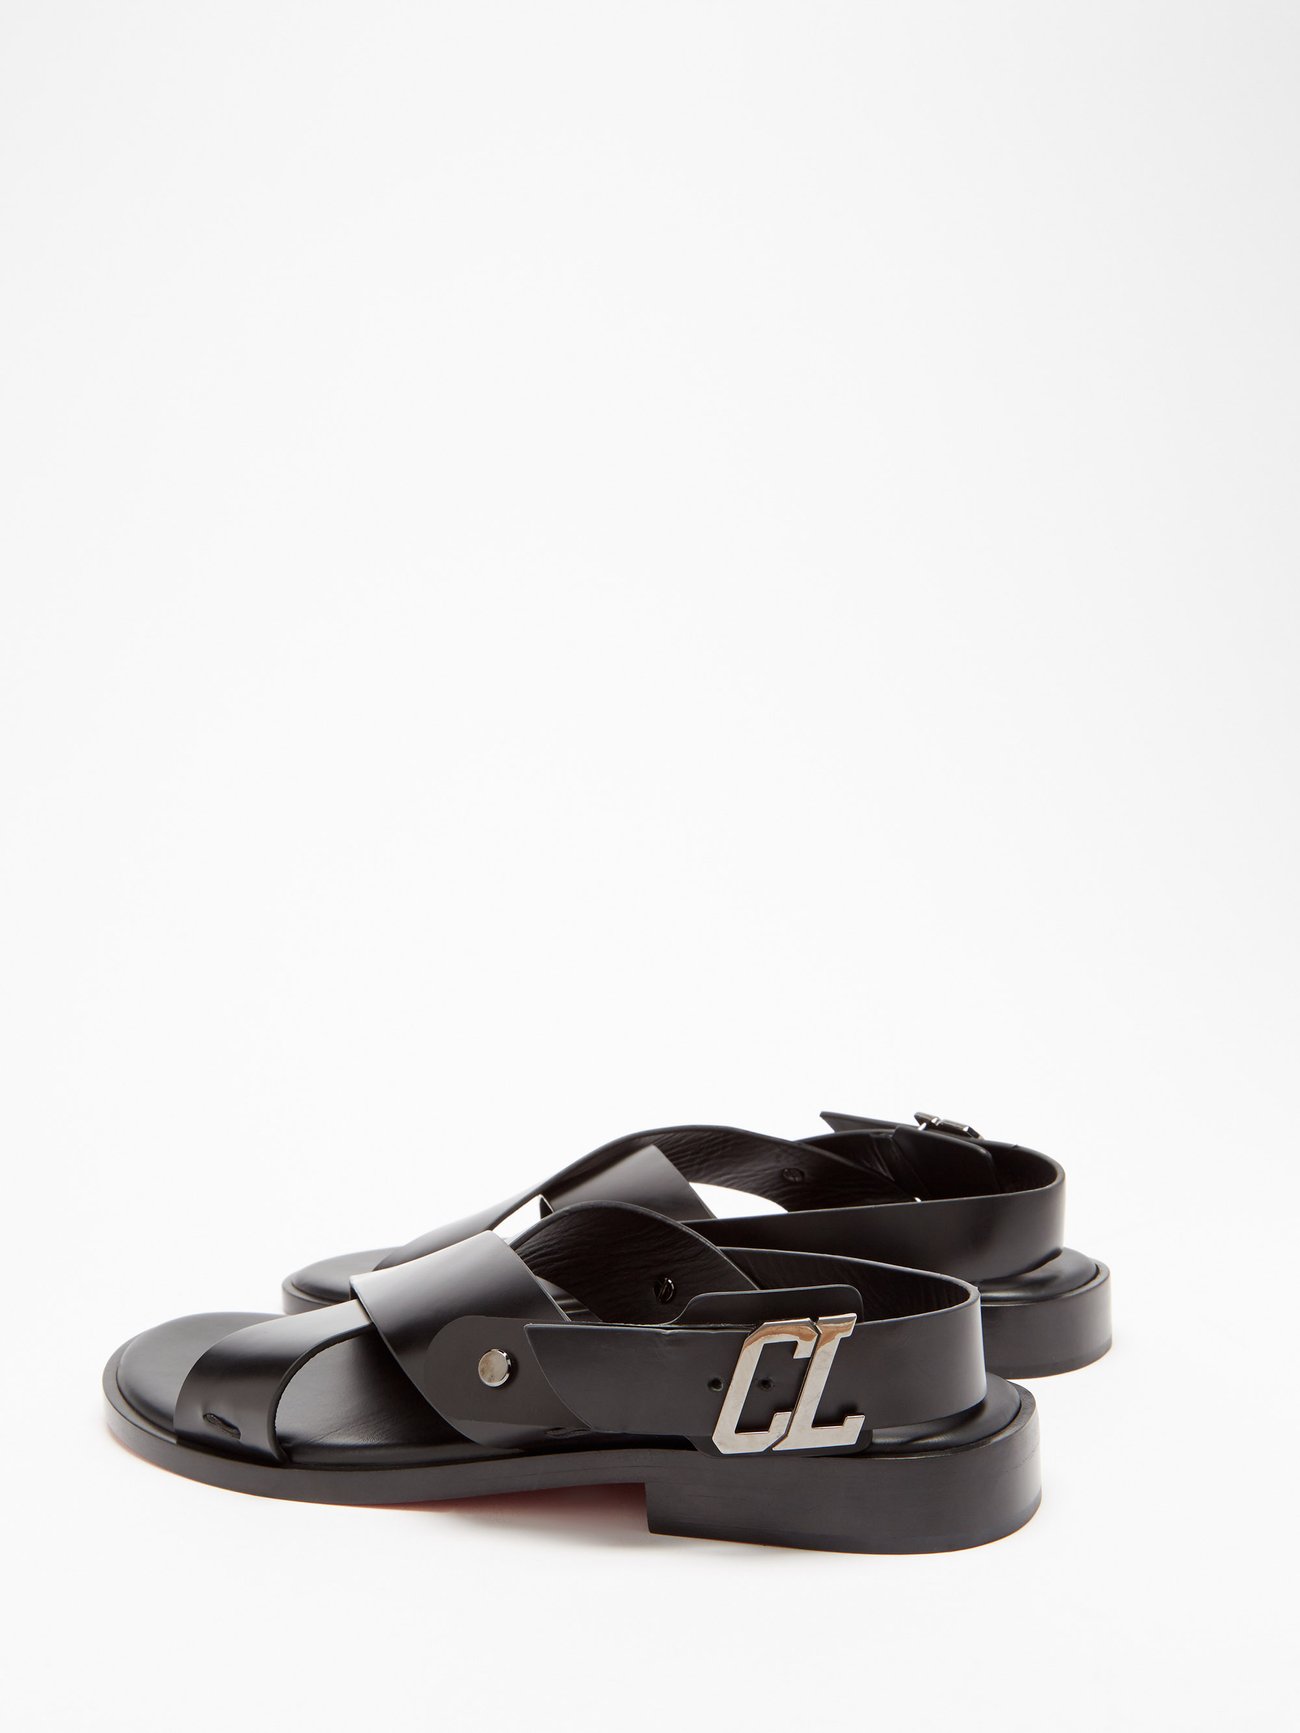 Christian Louboutin Farniento Black Sandals New